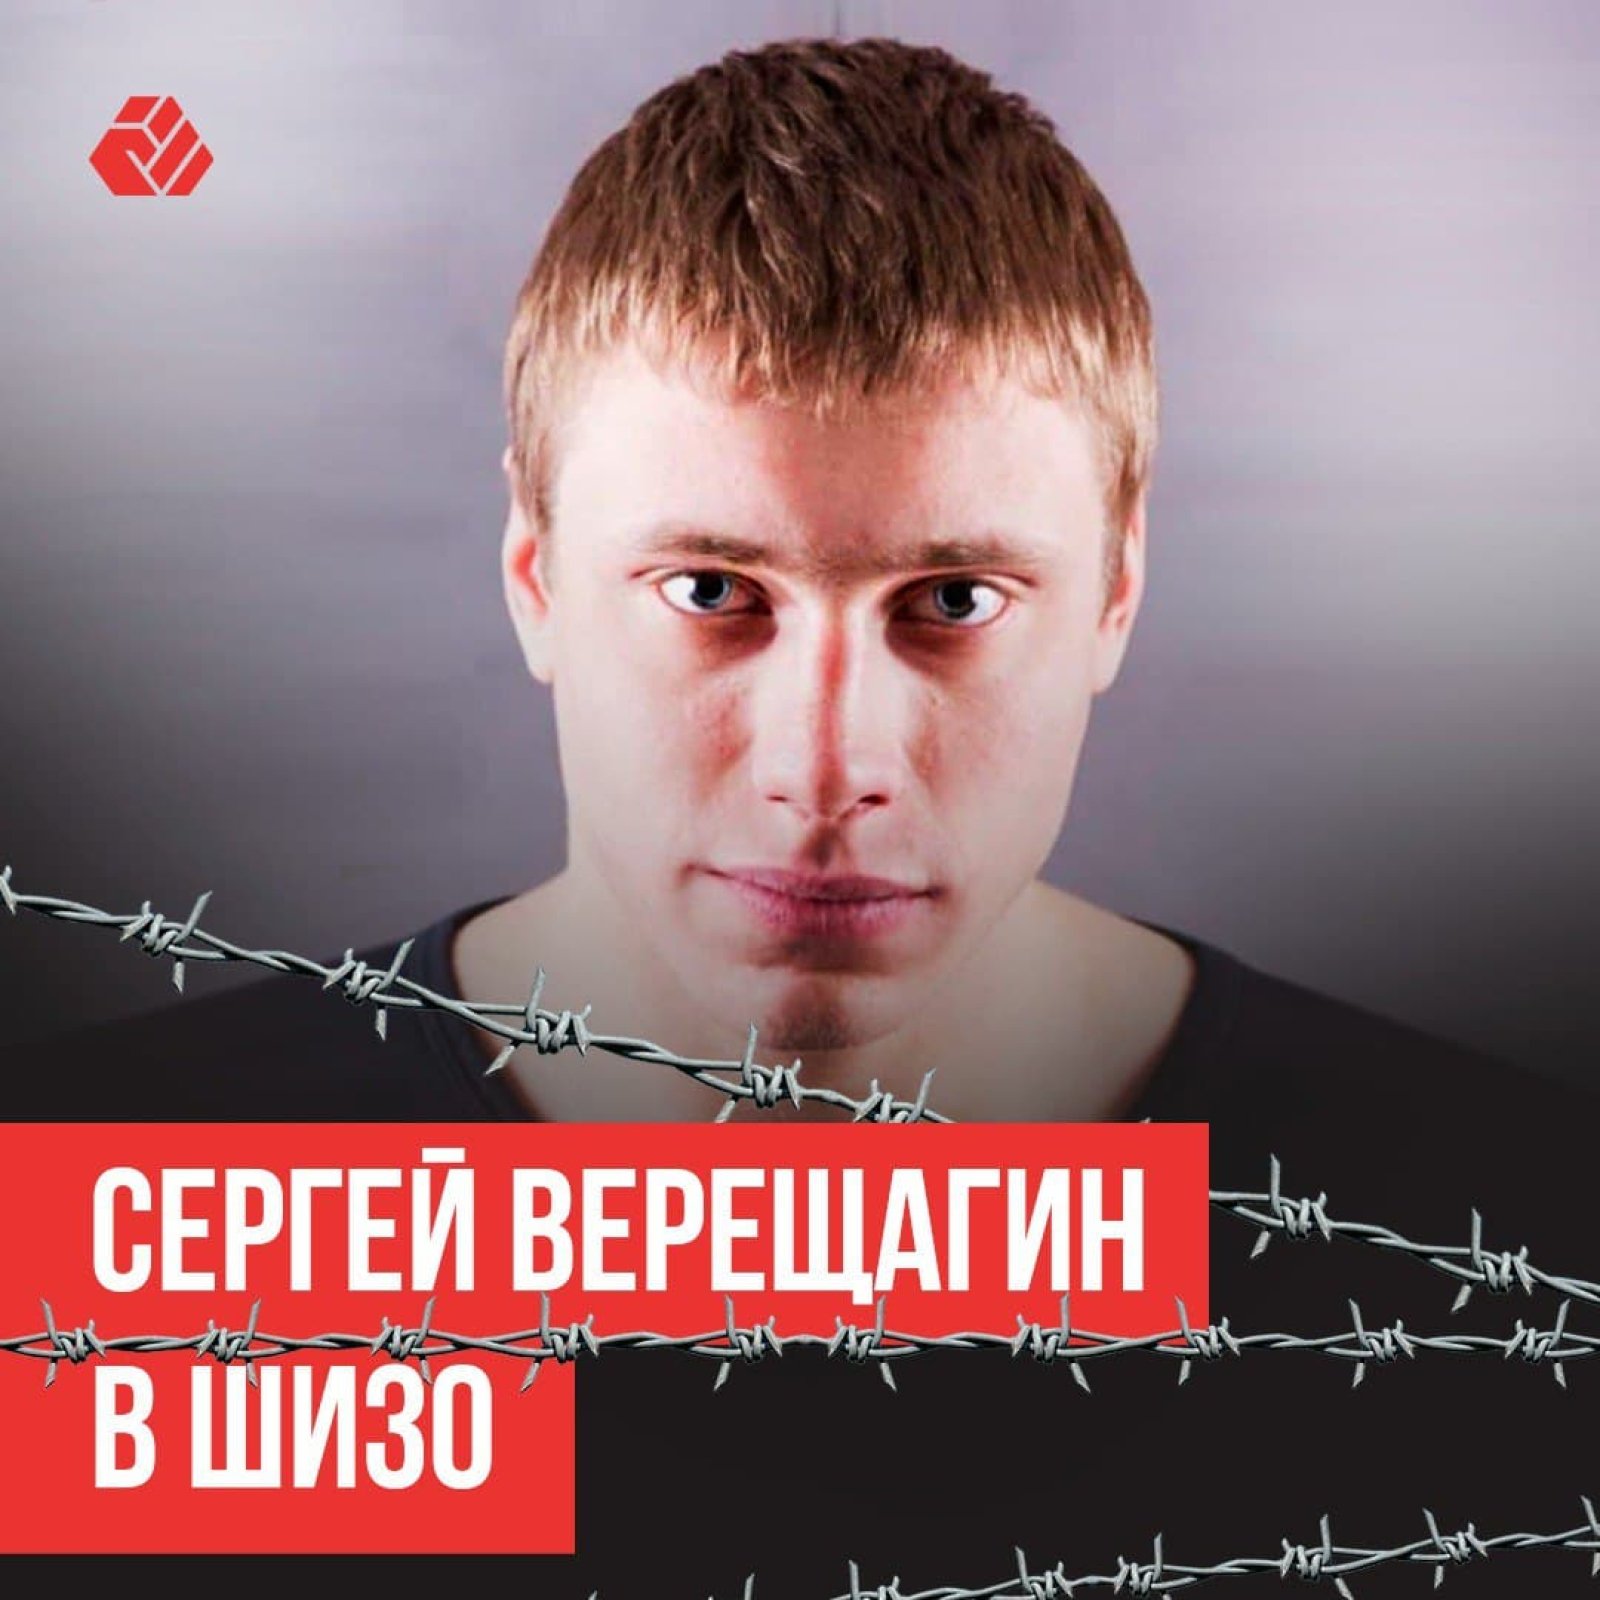 Sergey Vereshchagin is in the punishment cell